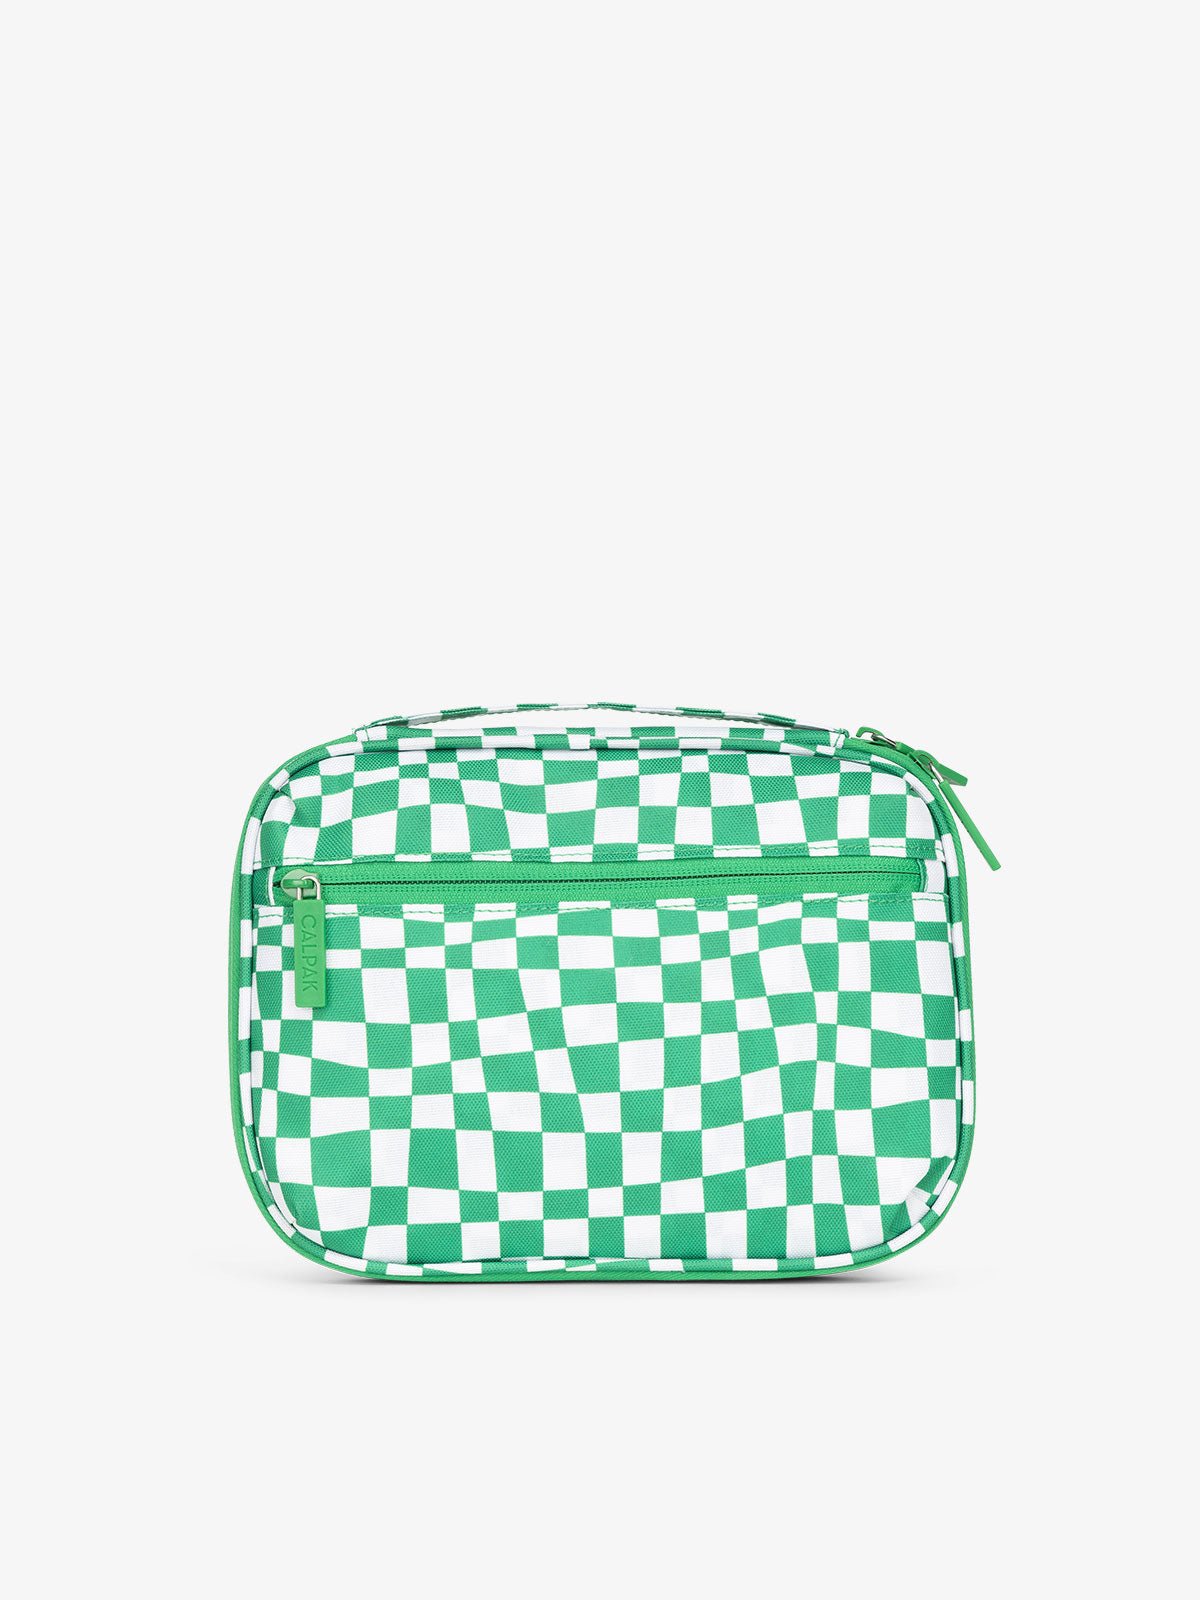 CALPAK tech and cables organizer bag in green checkerboard print